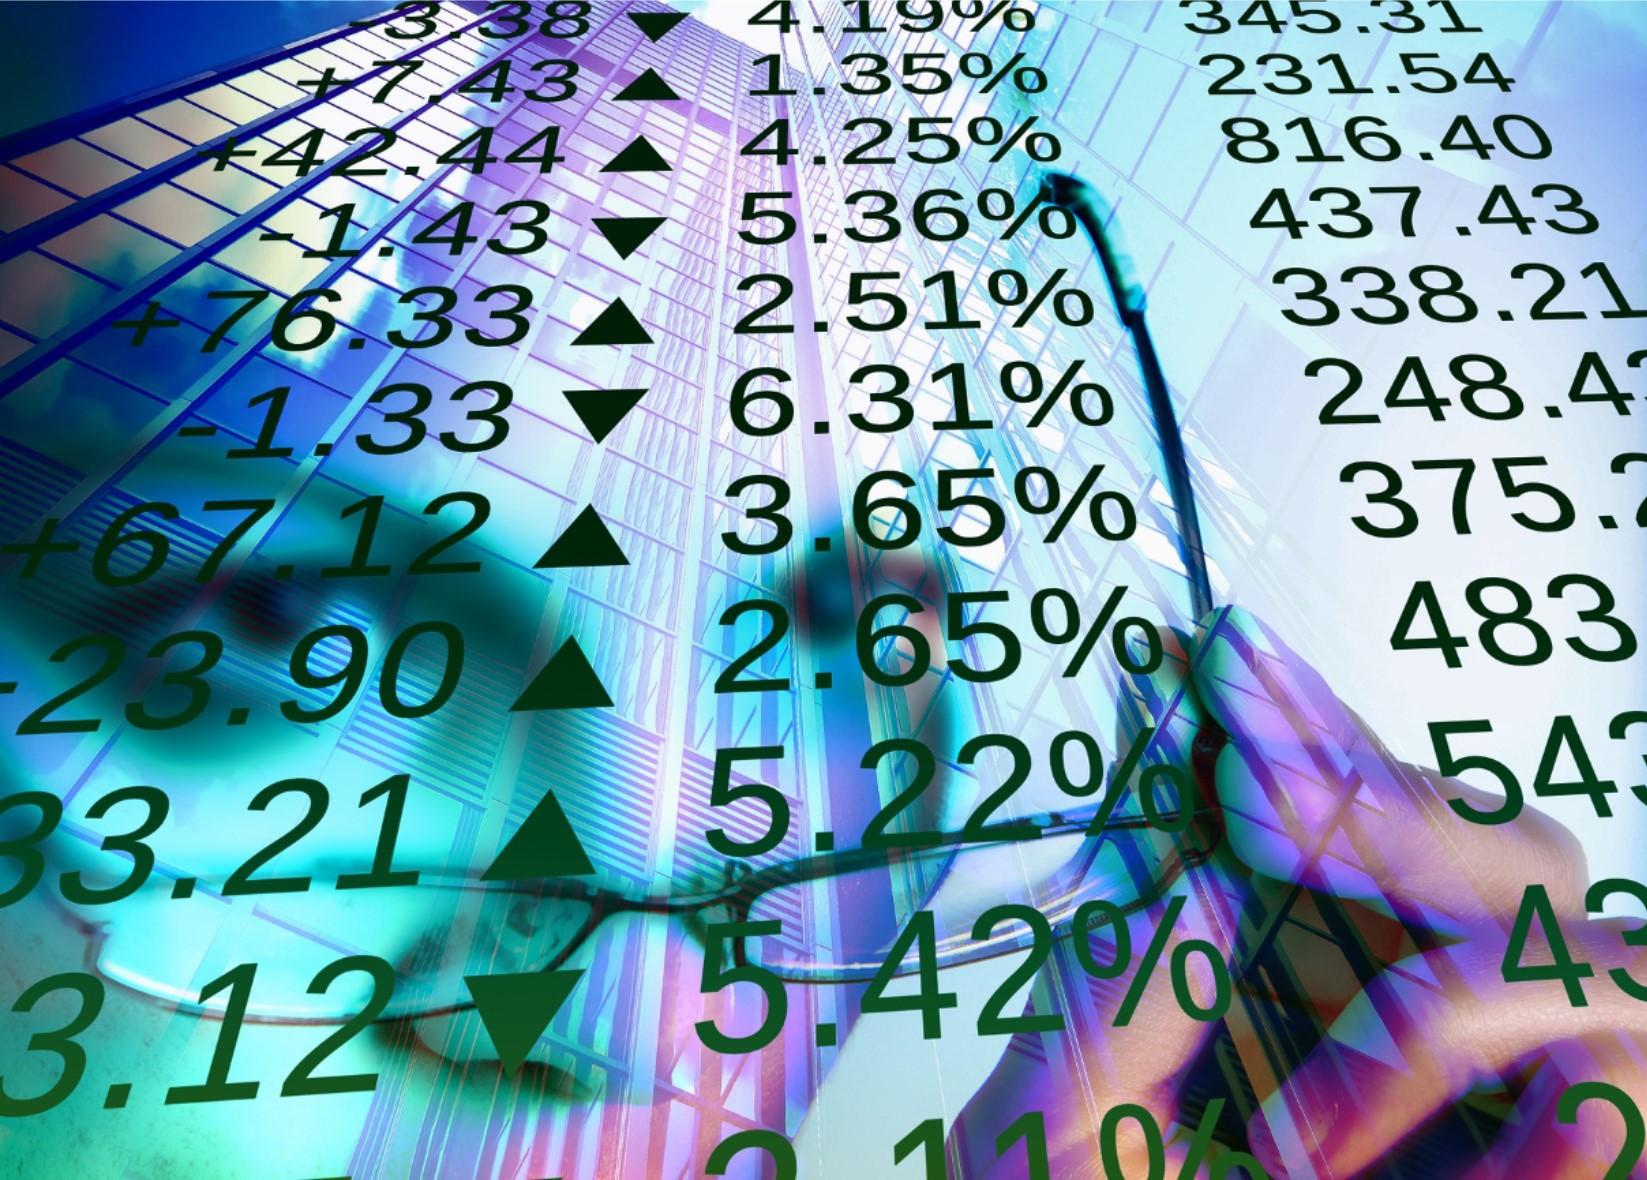 Stock market data